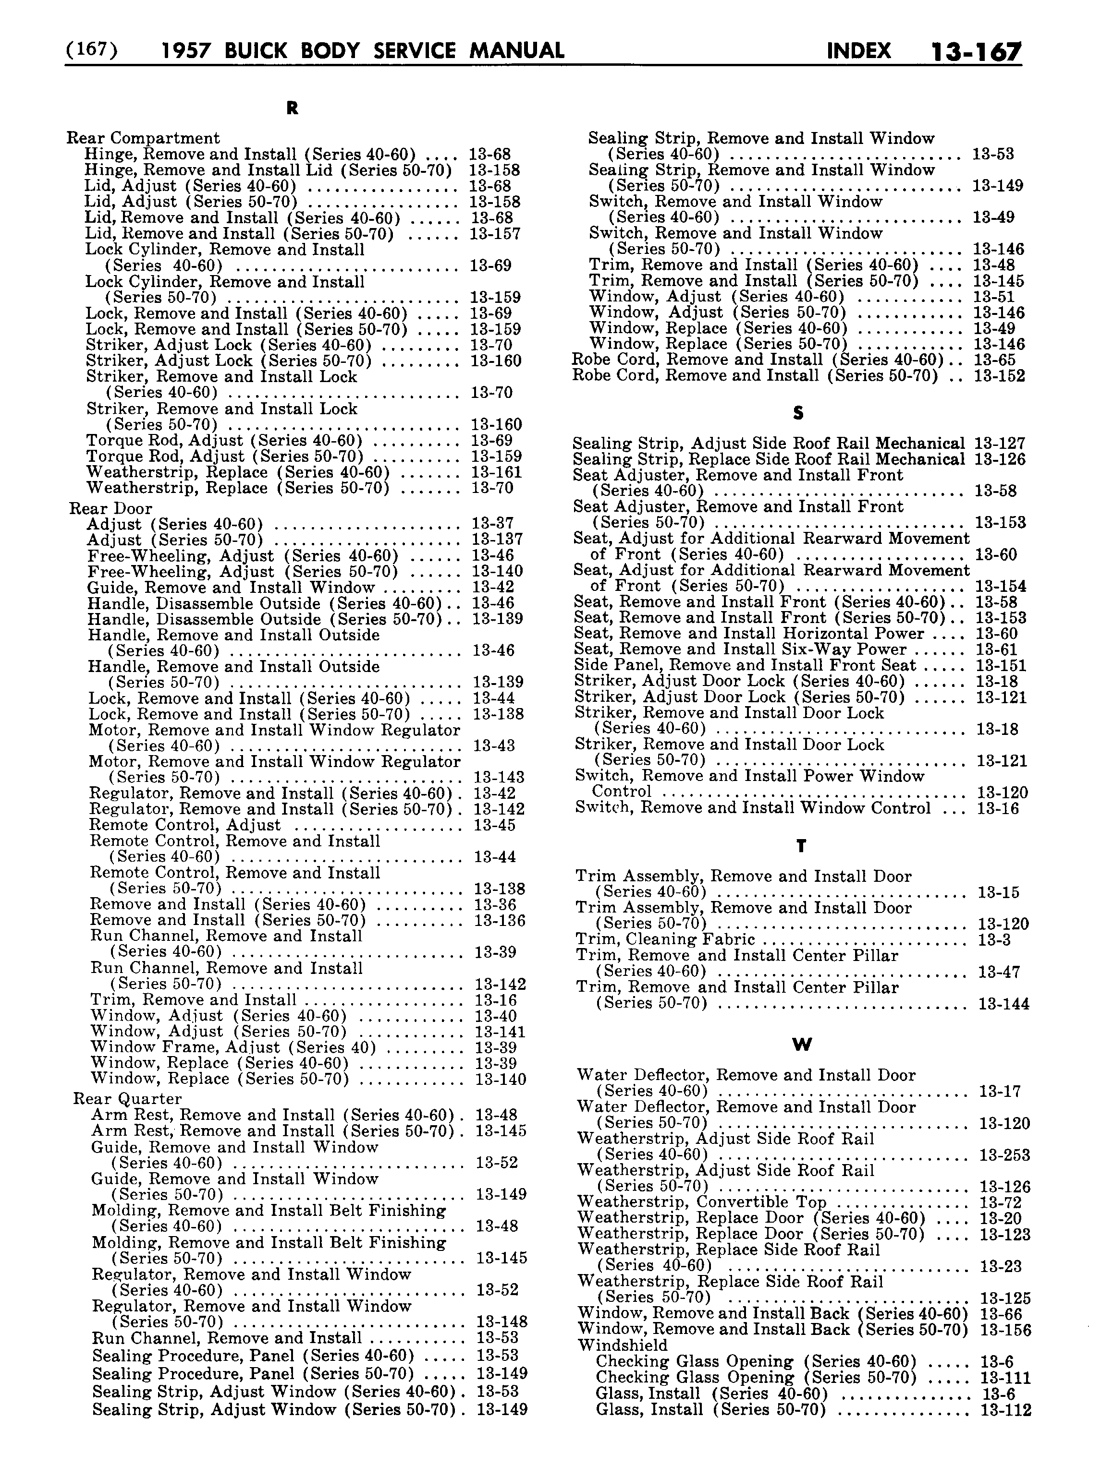 n_1957 Buick Body Service Manual-169-169.jpg